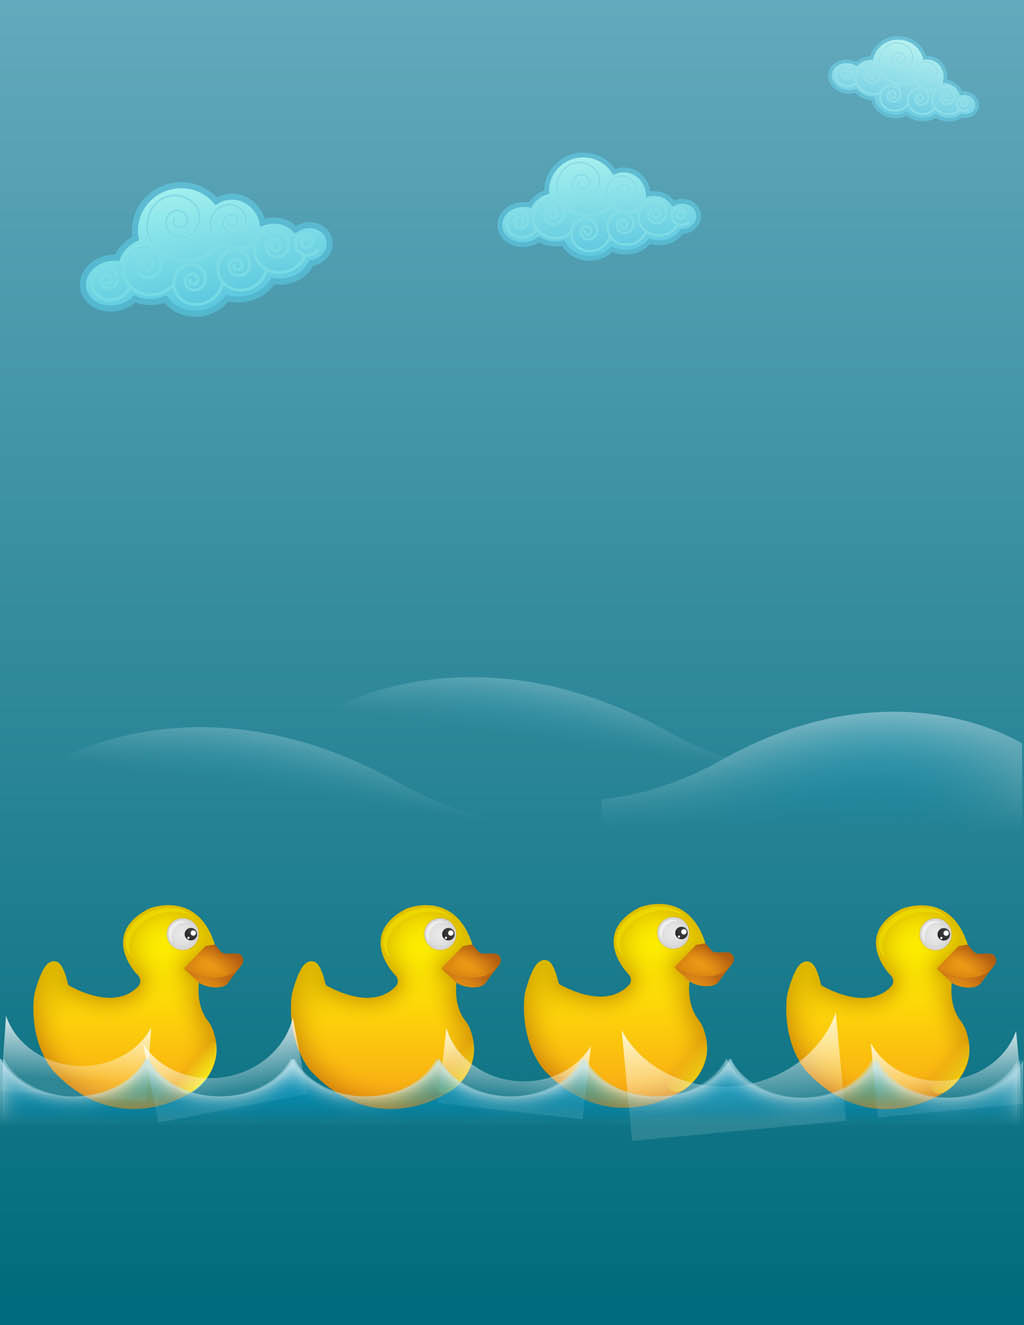 Rubber Ducks Illustration